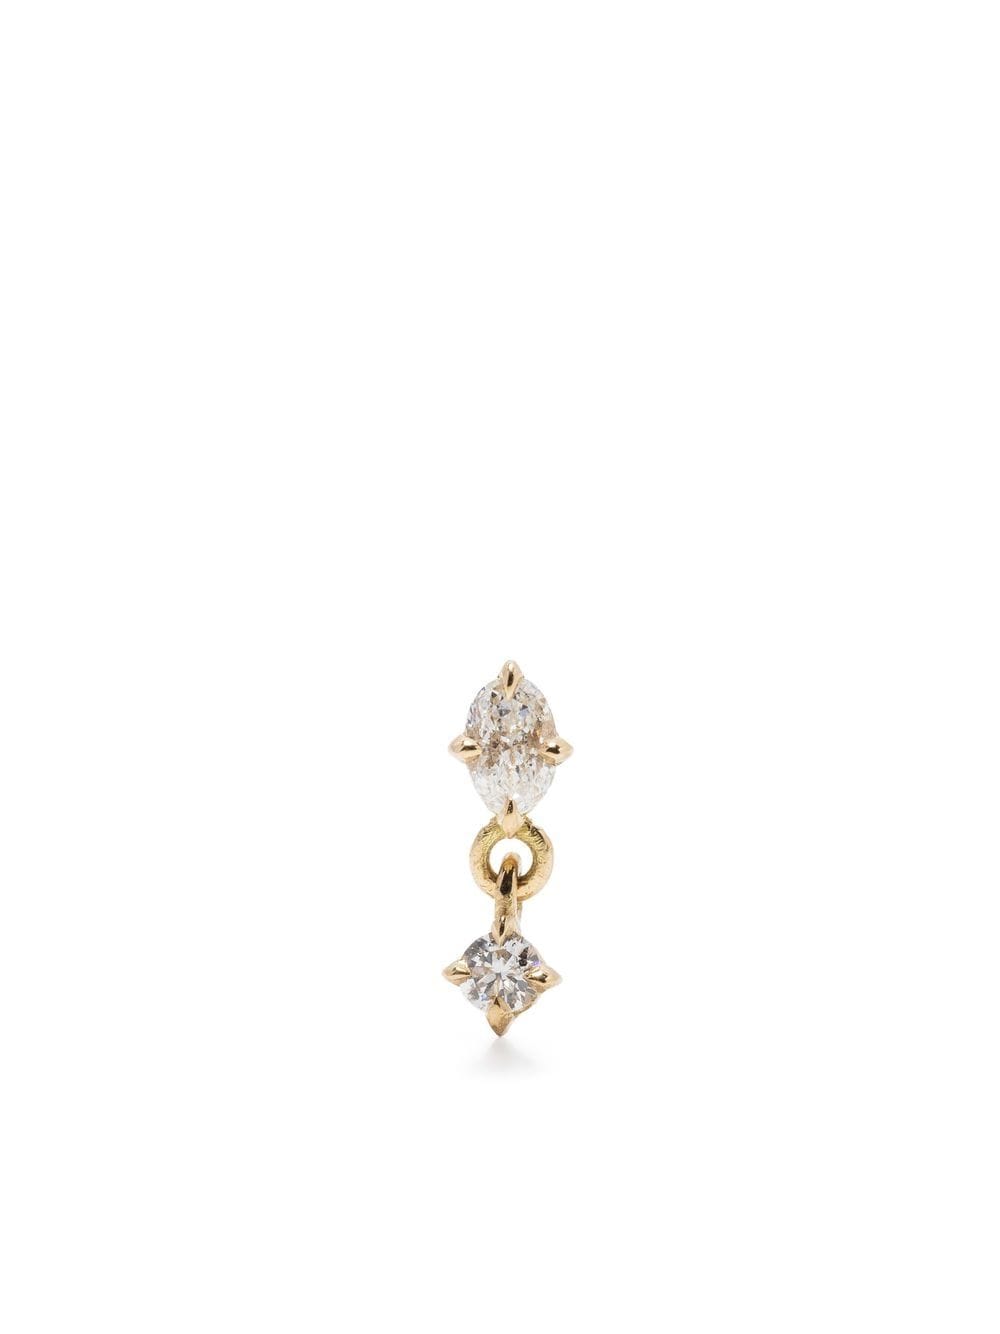 Lizzie Mandler Fine Jewelry 18kt yellow gold Mix Matched diamond stud earring von Lizzie Mandler Fine Jewelry